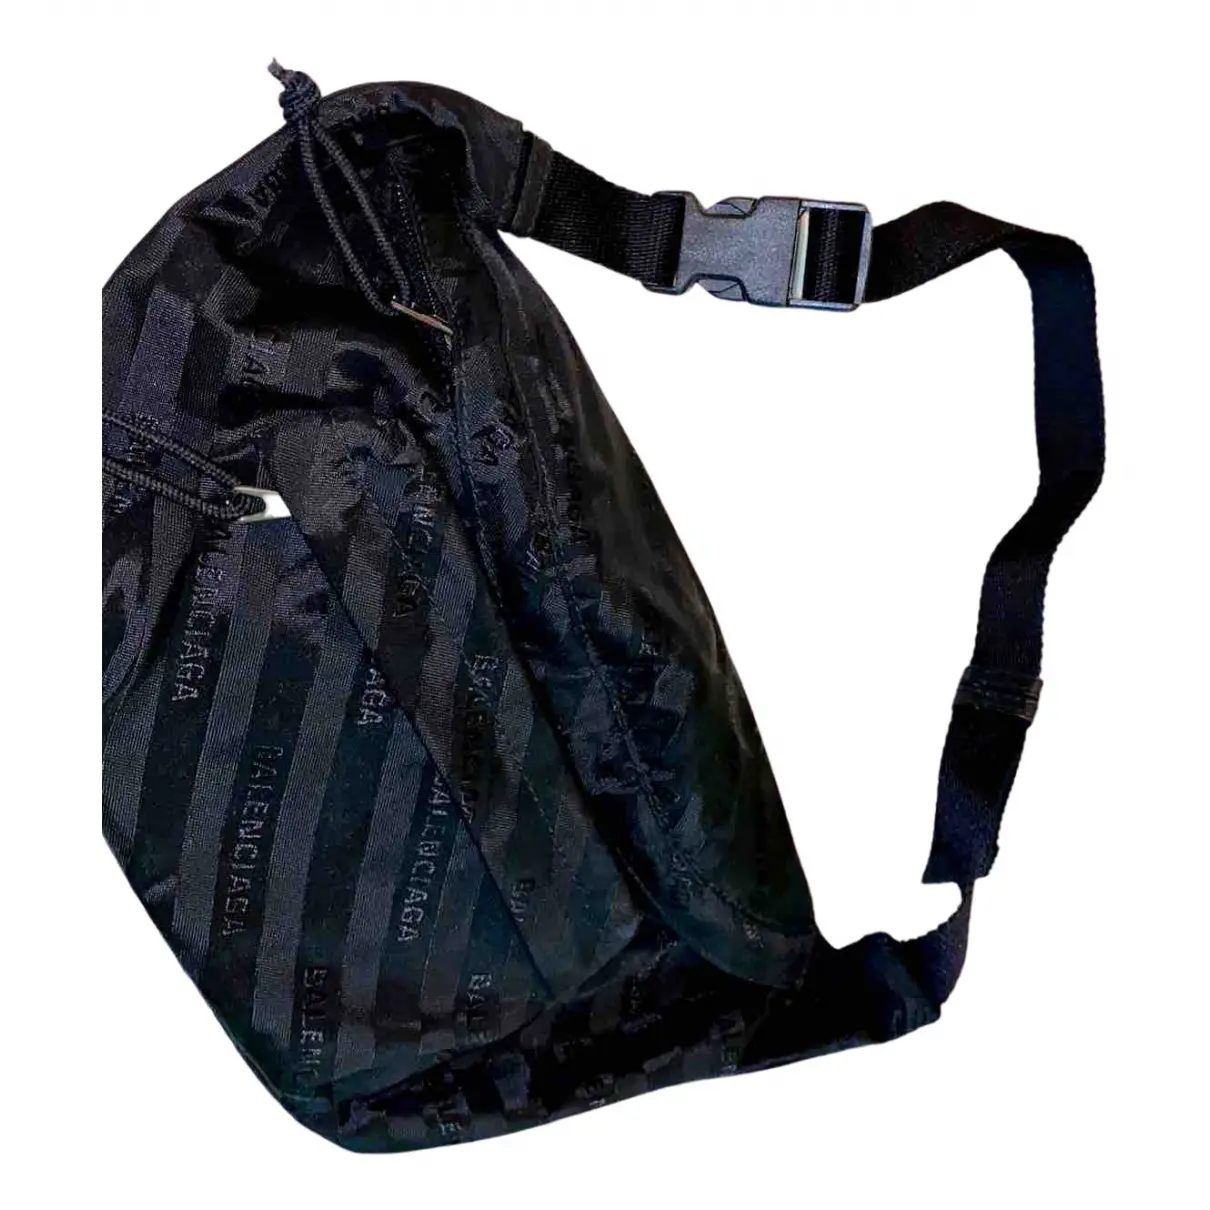 Cloth clutch bag Balenciaga